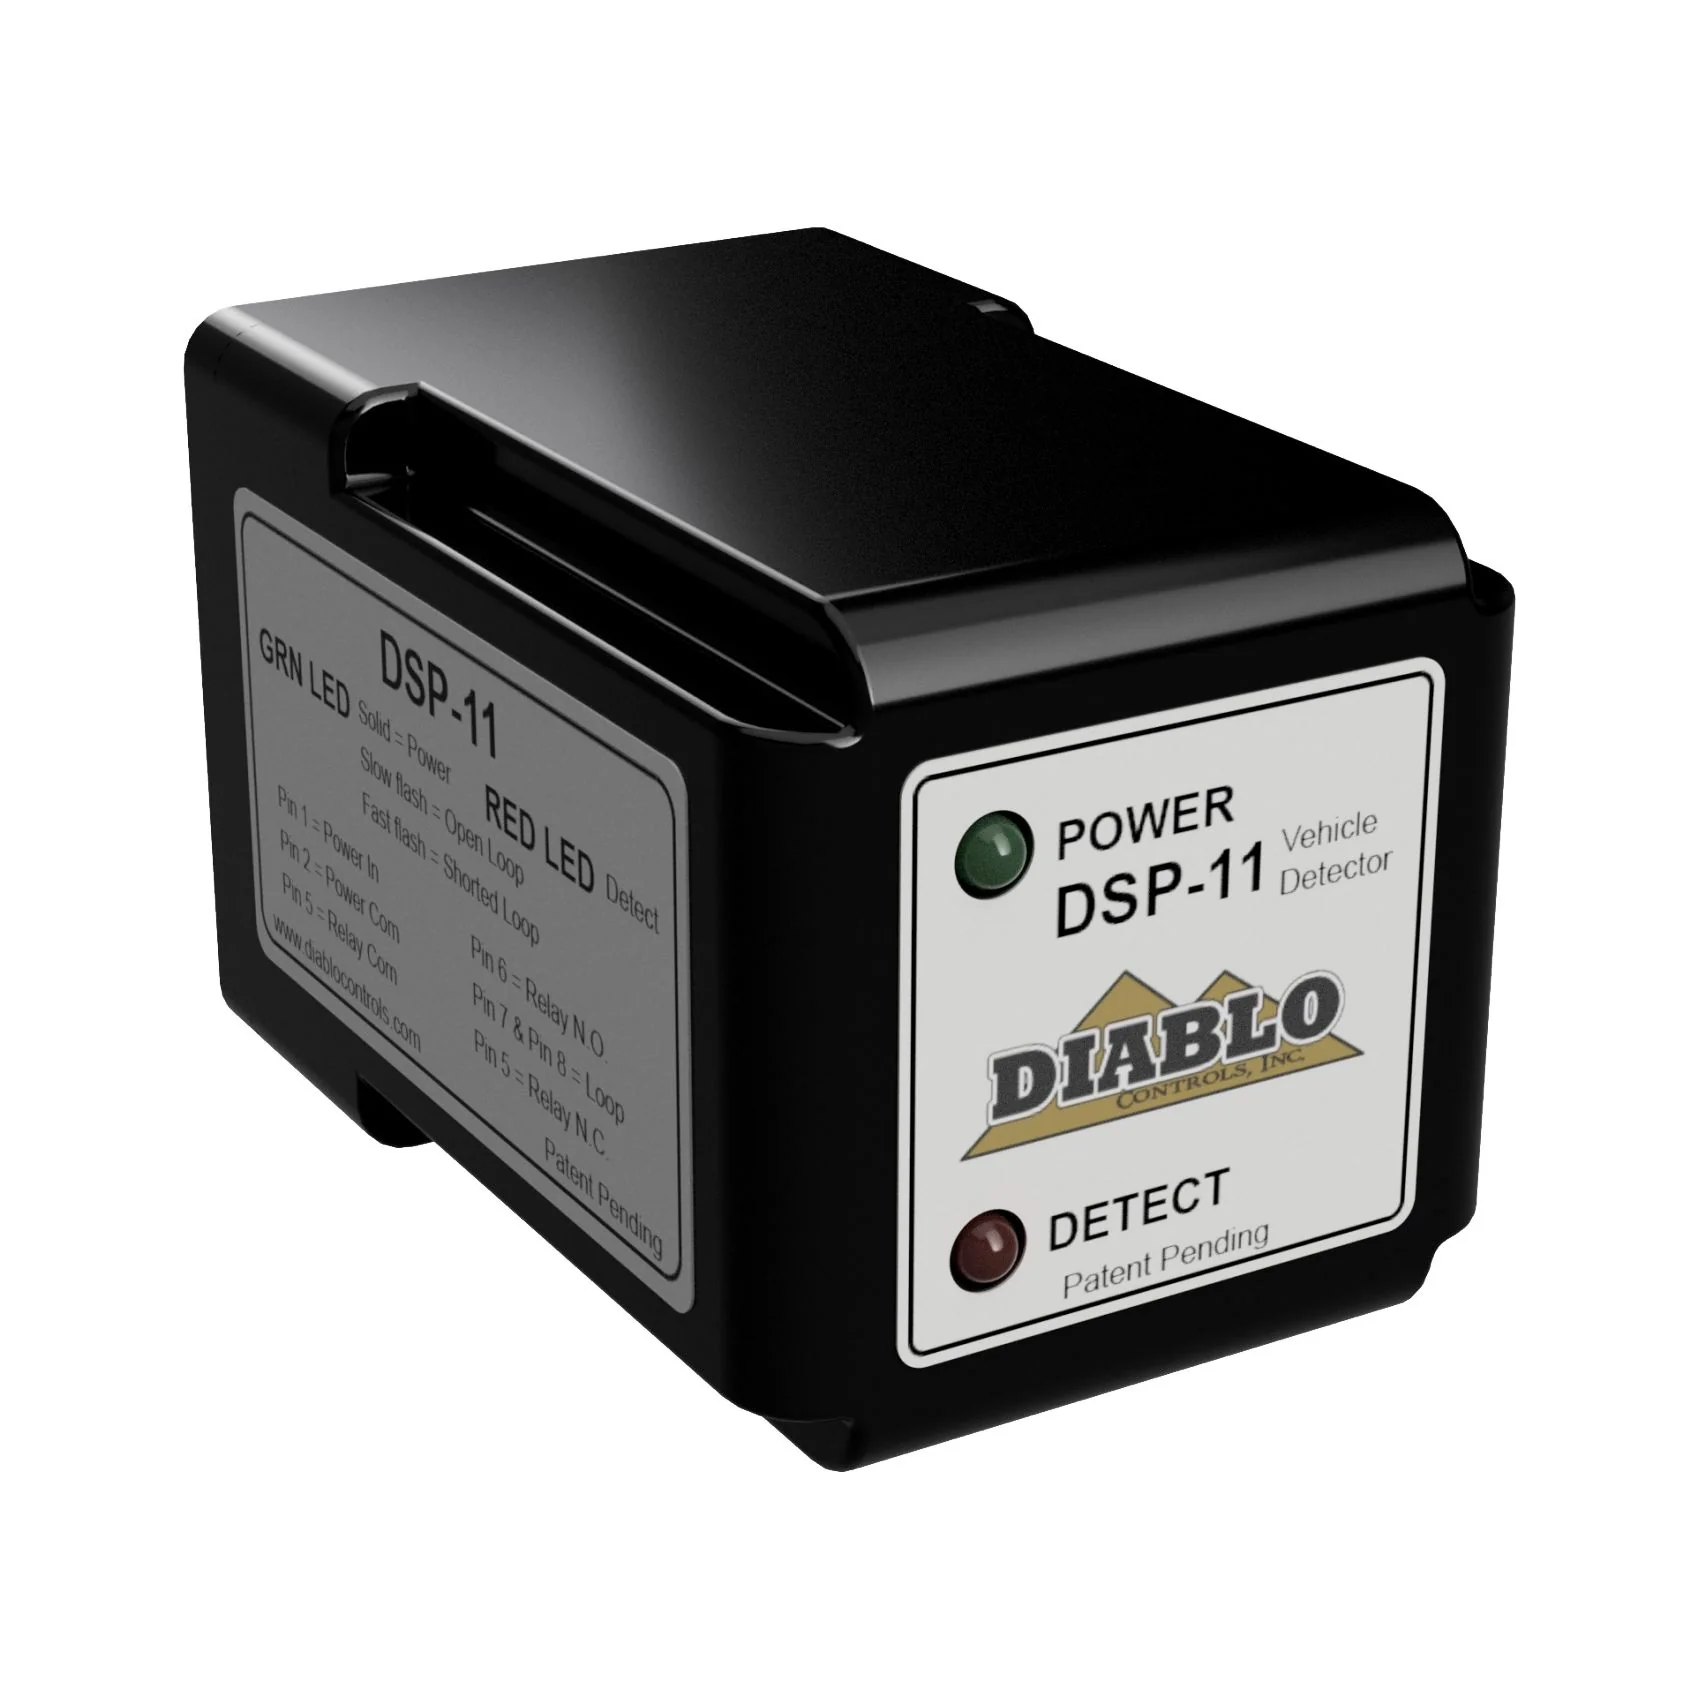 Diablo DSP-11 Vehicle Detector